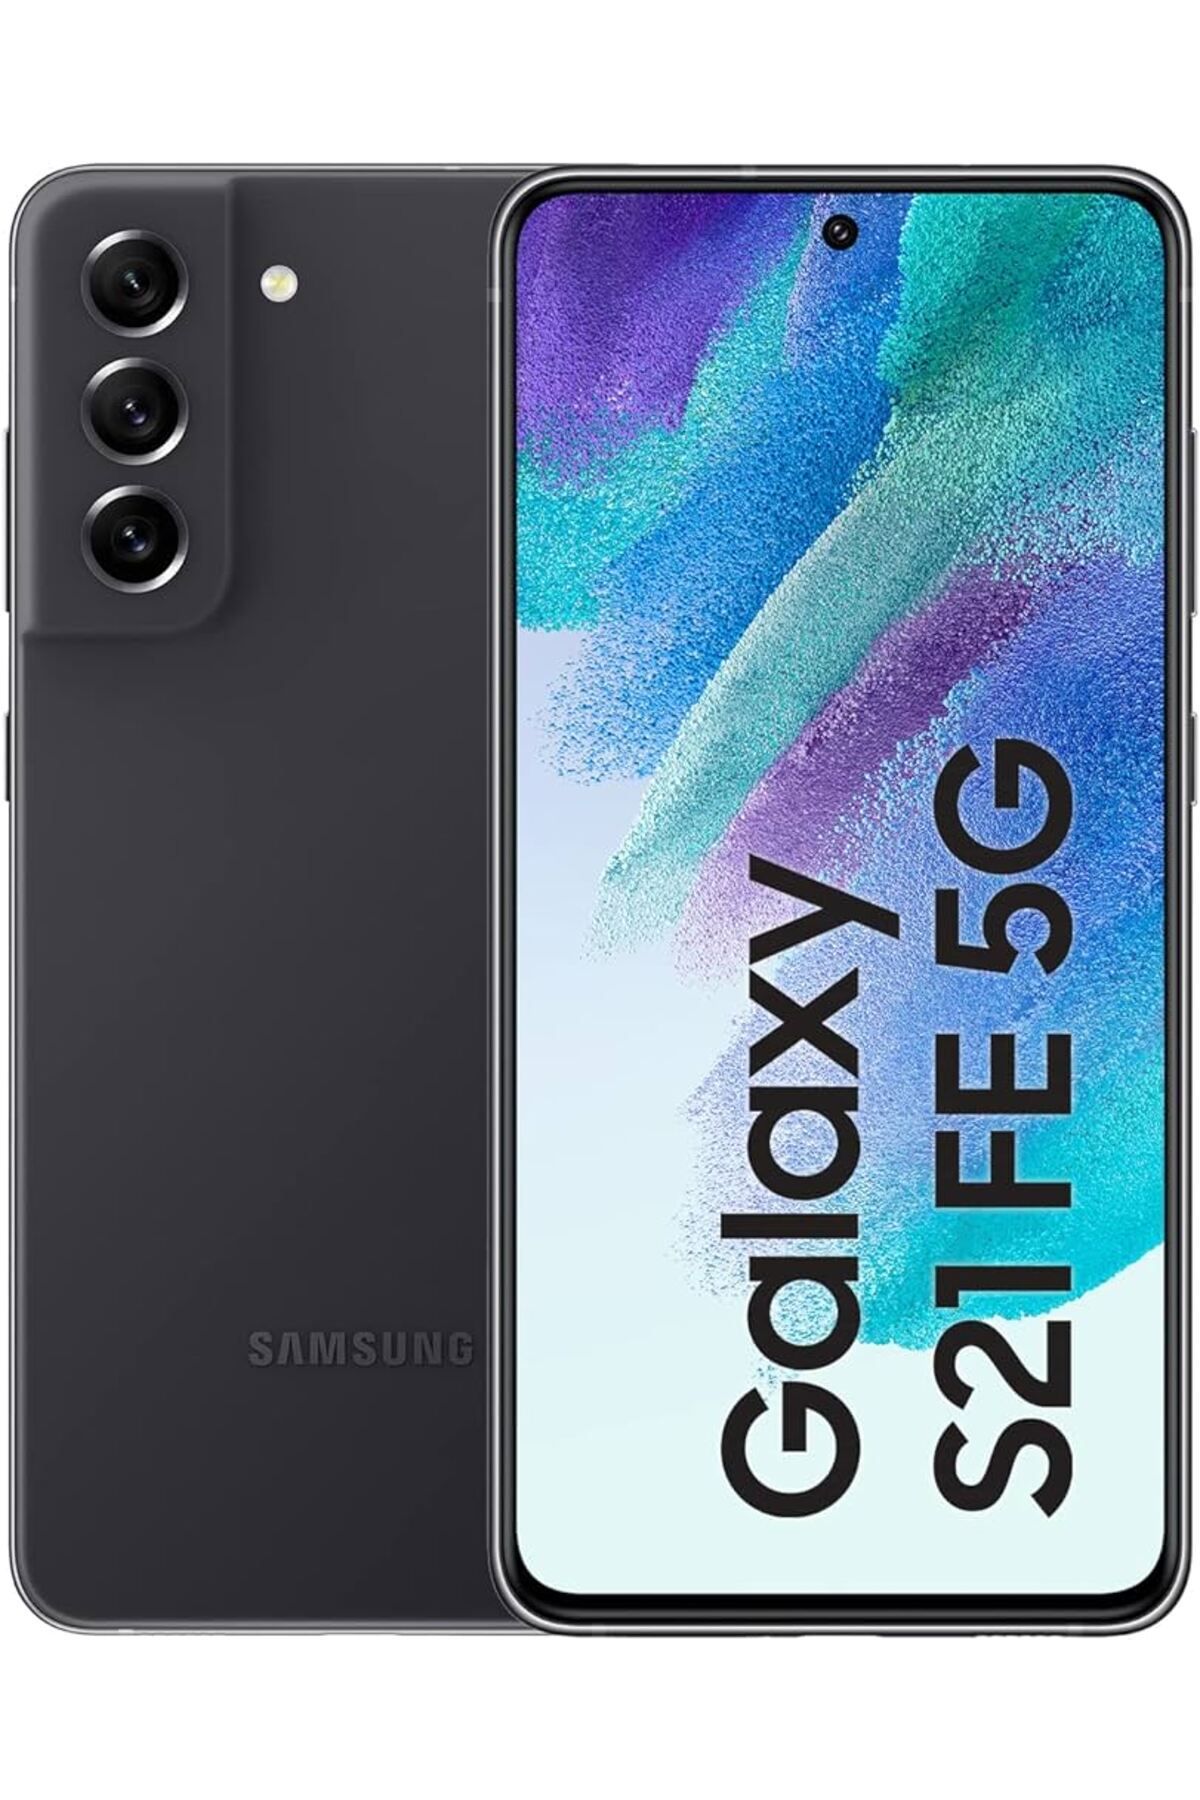 Samsung Yenilenmiş Samsung Galaxy S21 FE 128GB Siyah A Kalite